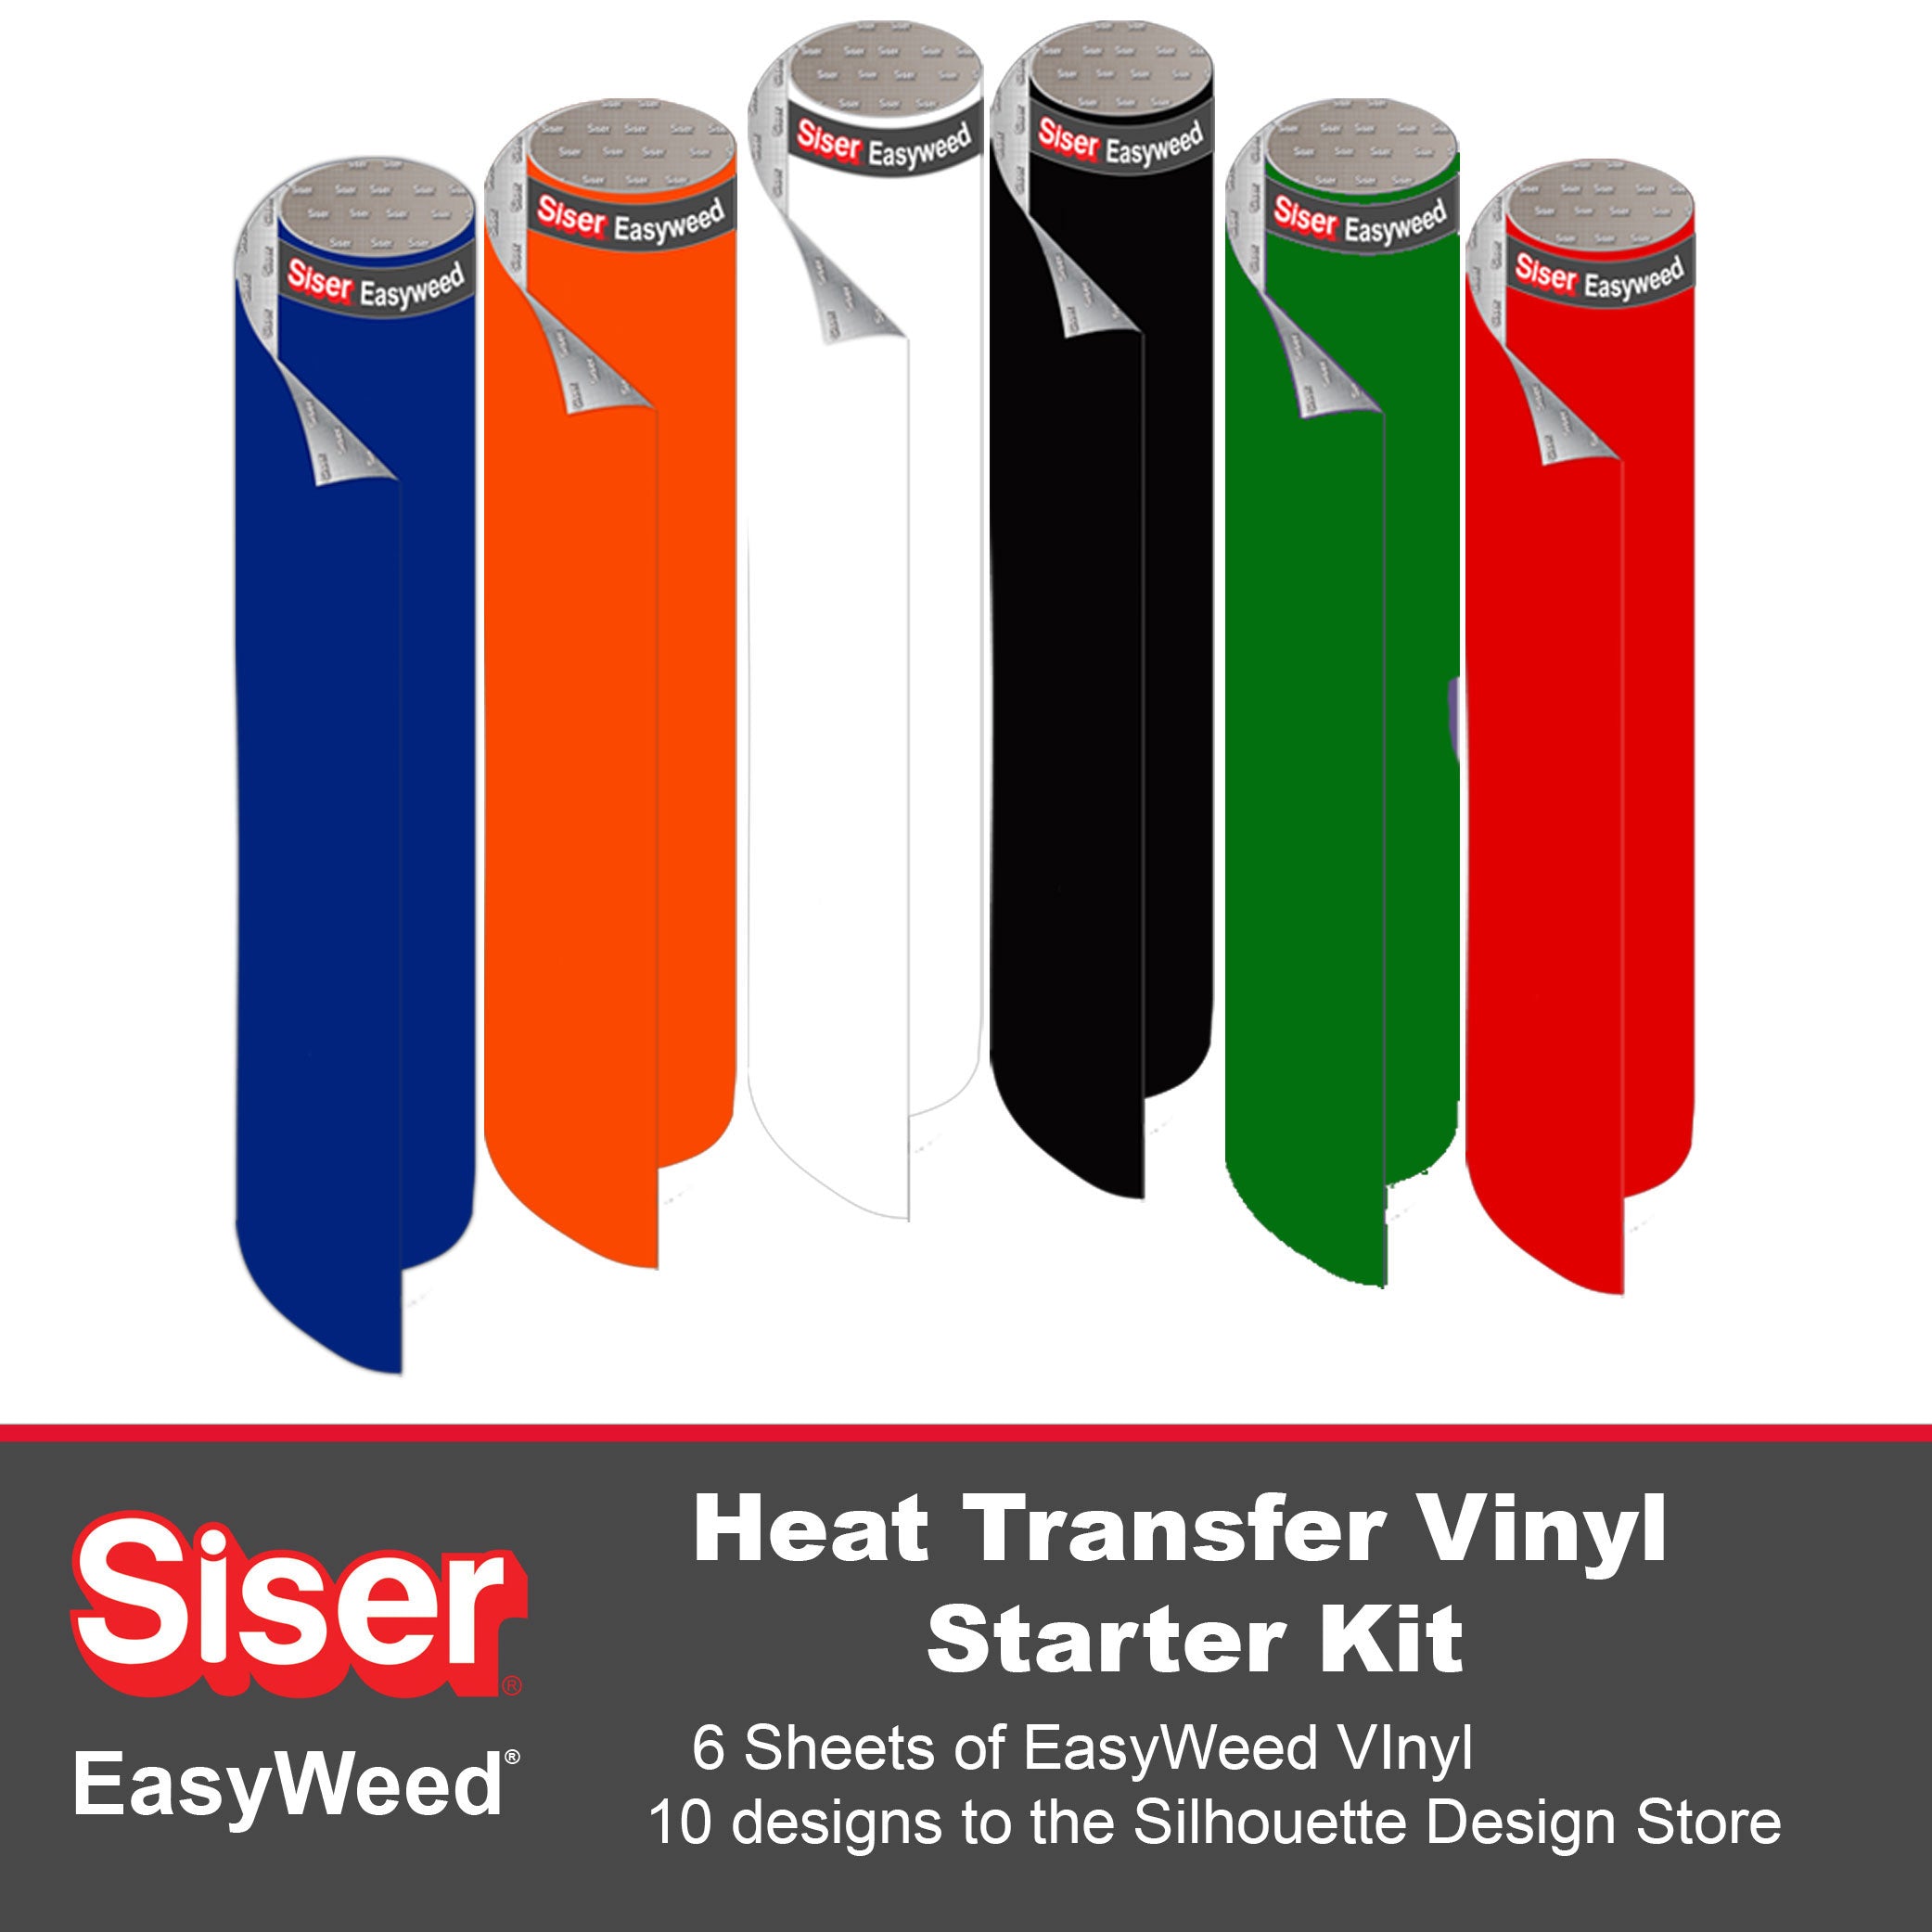 Silhouette Portrait 4 Bundle with Vinyl Starter Kit, Heat Transfer Starter Kit, 24 Pack of Pens, Tool Kit, Portrait 4 Start Up Guide with Extra